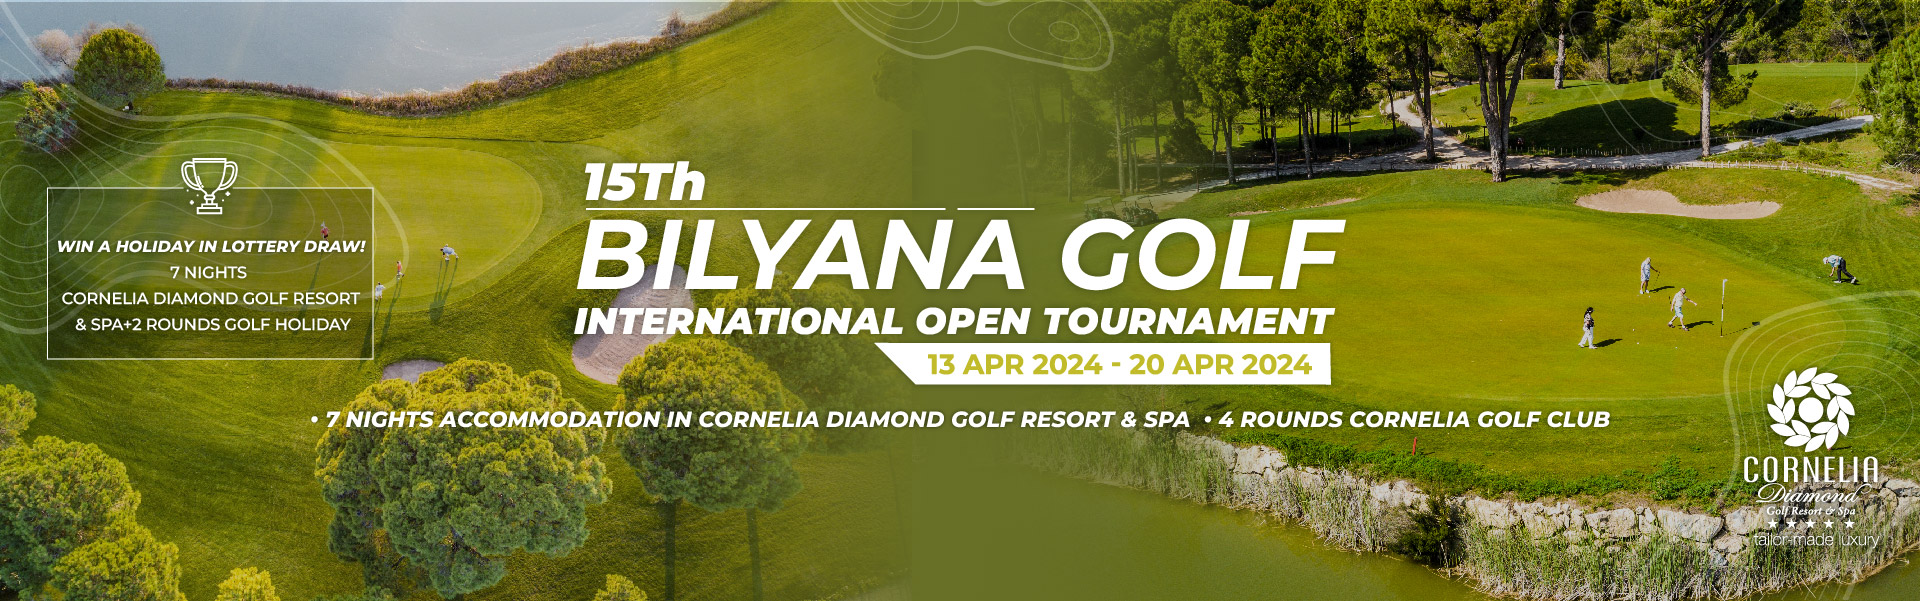 Bilyana Golf - 15Th BILYANA GOLF INTERNATIONAL OPEN TOURNAMENT